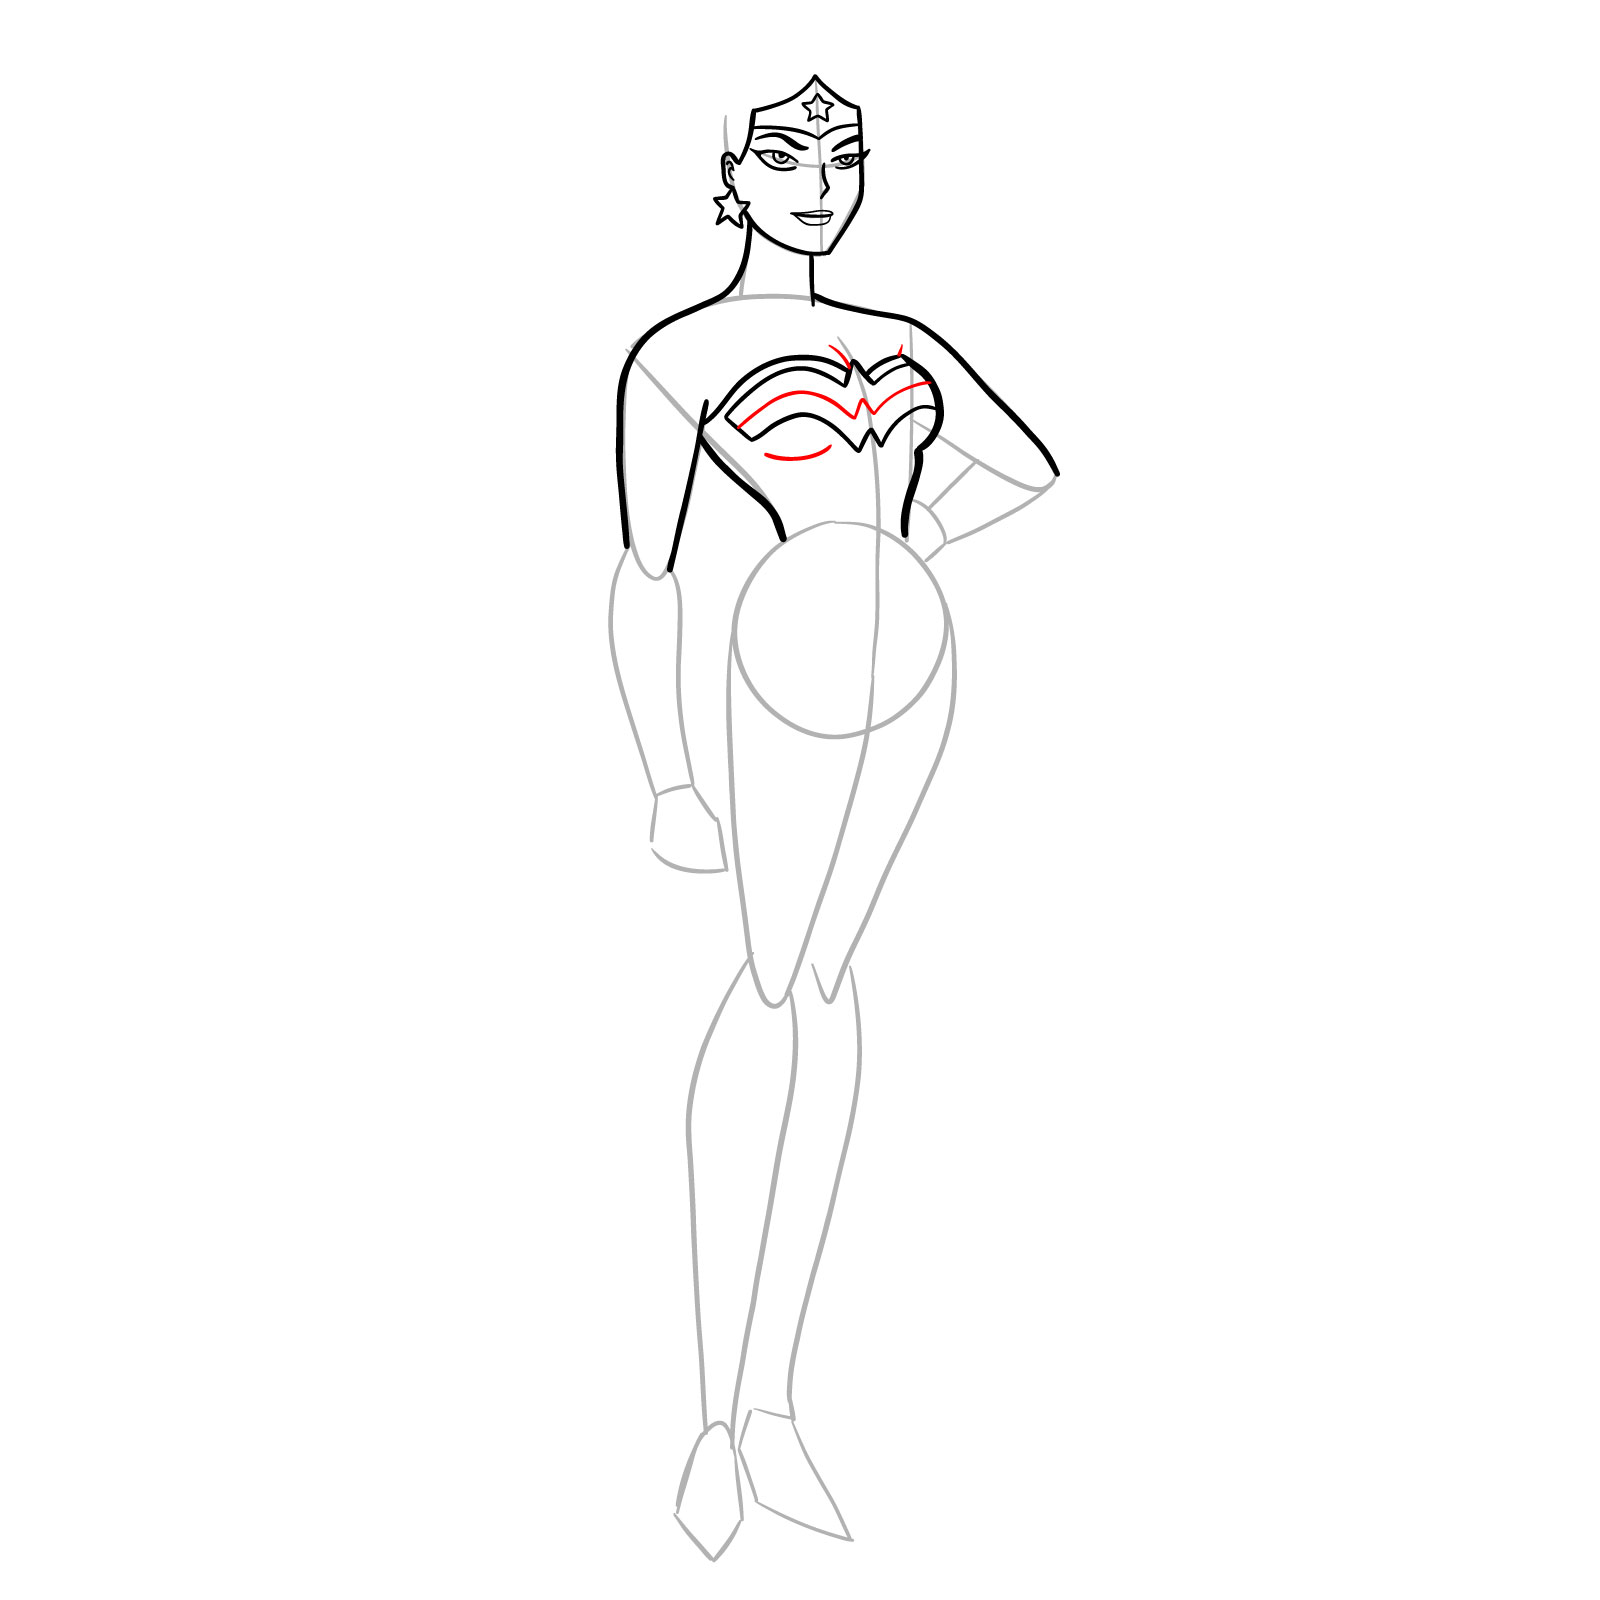 How to draw Wonder Woman cartoon style - step 15